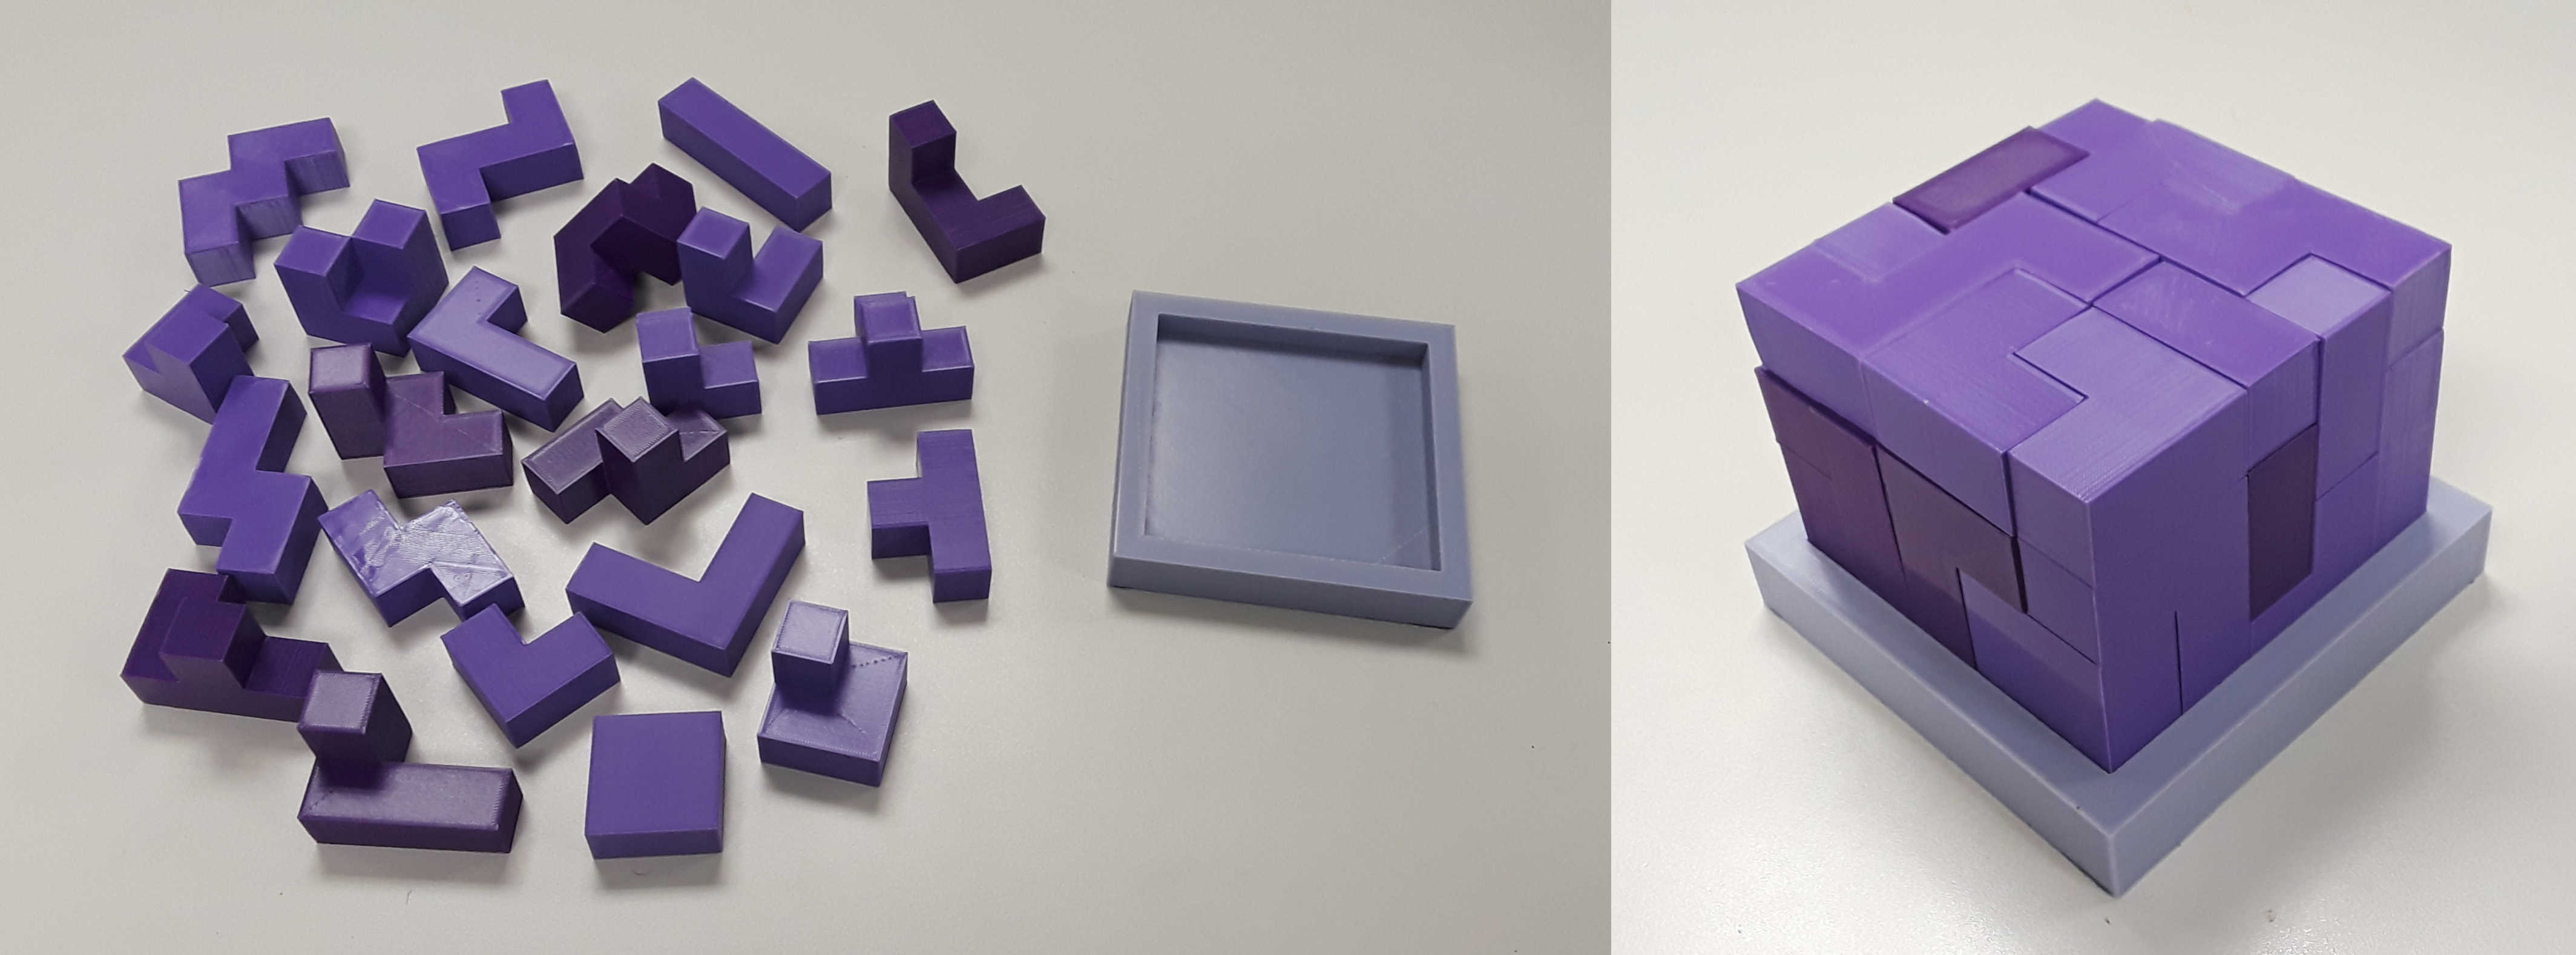 Polycube puzzle